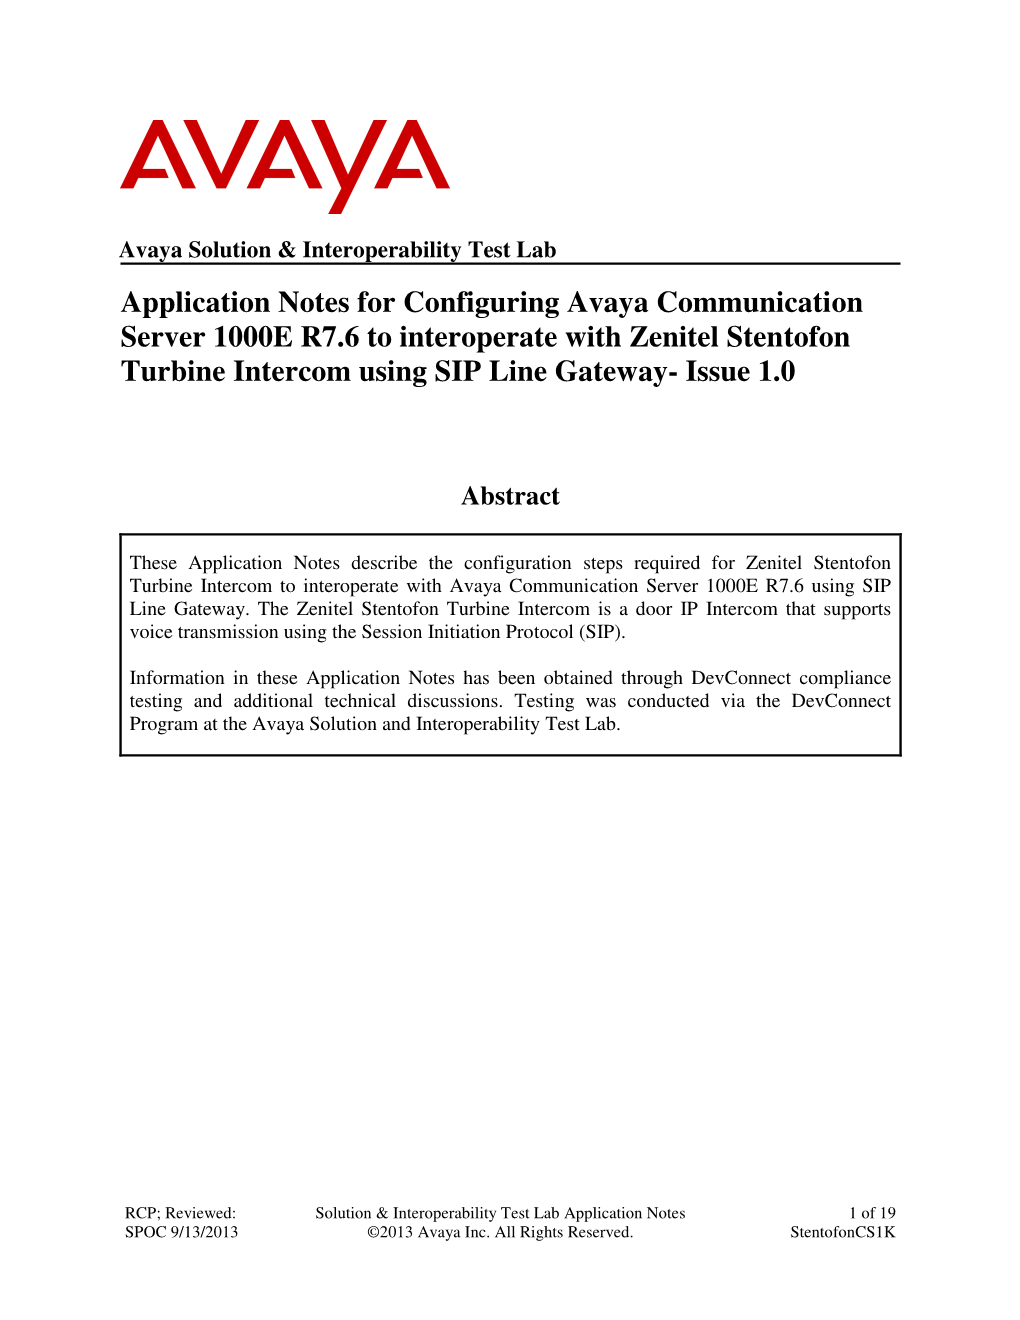 Application Notes for Configuring Avaya Communication Server 1000E R7.6 to Interoperate with Zenitel Stentofon Turbine Intercom Using SIP Line Gateway- Issue 1.0